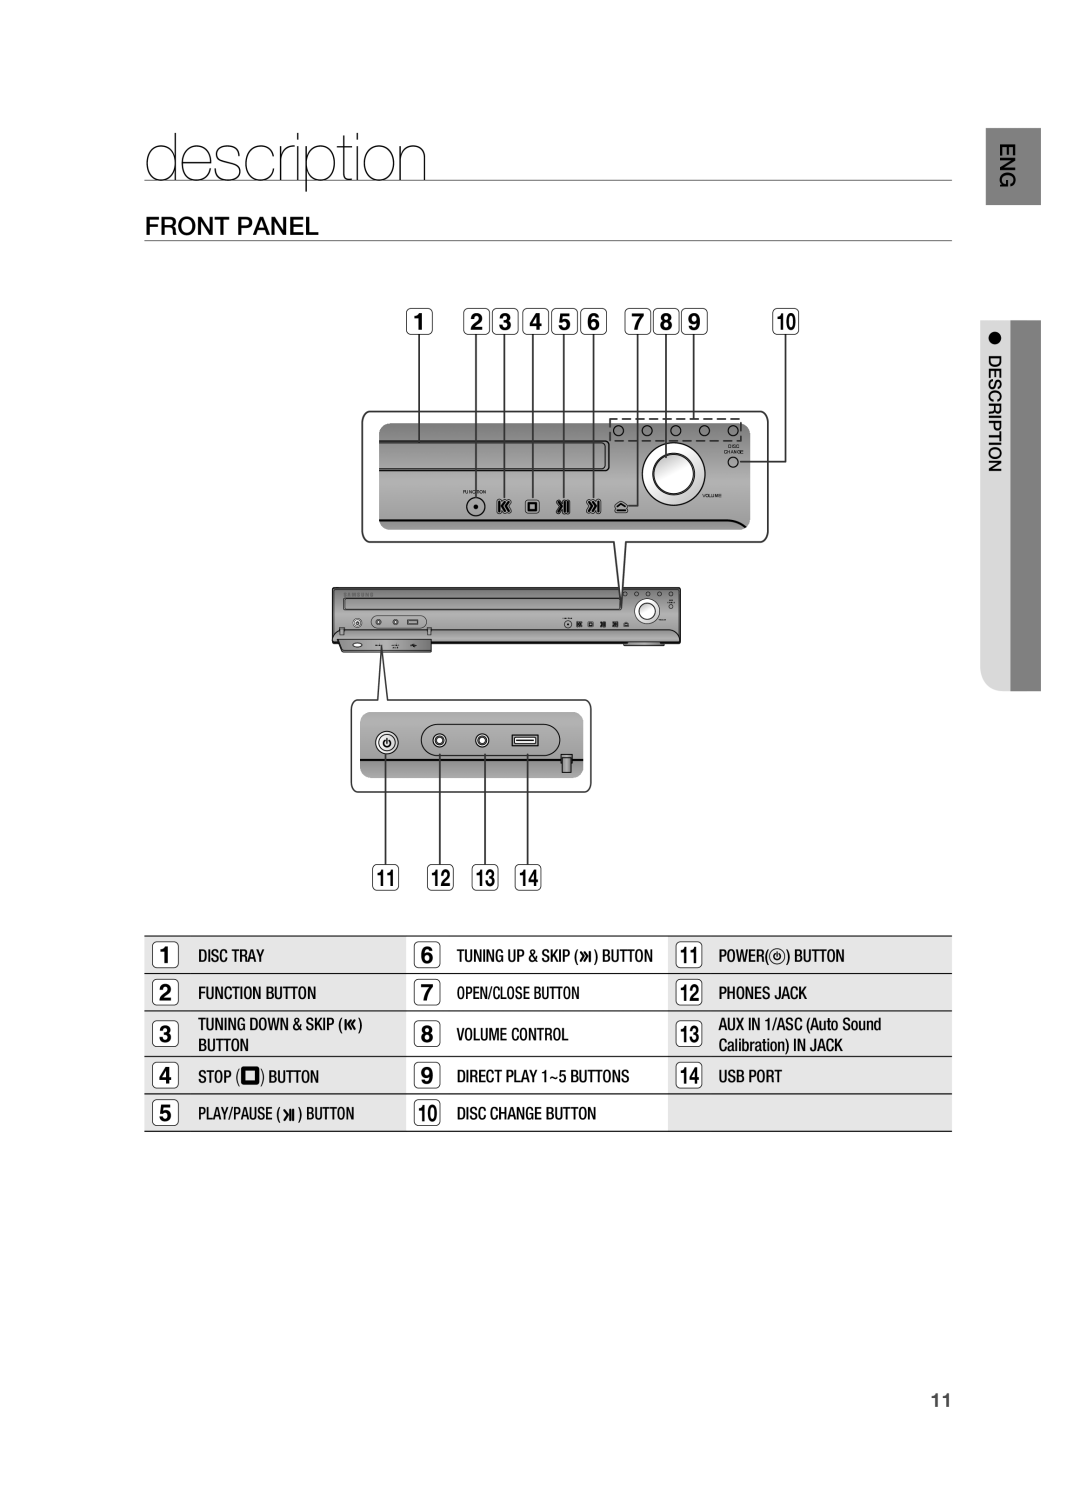 Samsung HT-TZ515 user manual description, Front Panel 